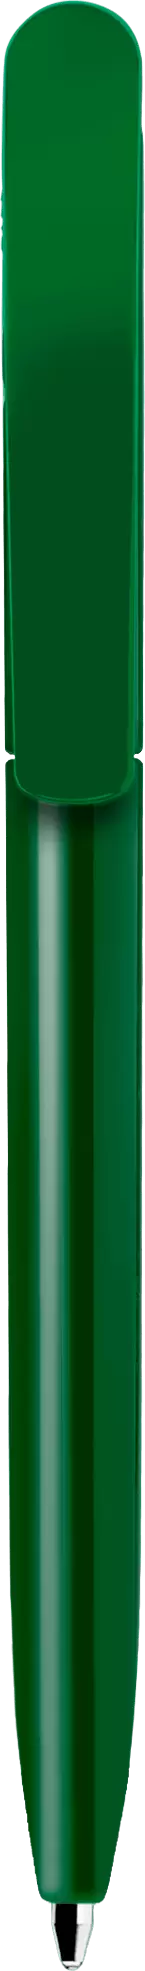 Ручка VIVALDI COLOR Зеленая 1336-02